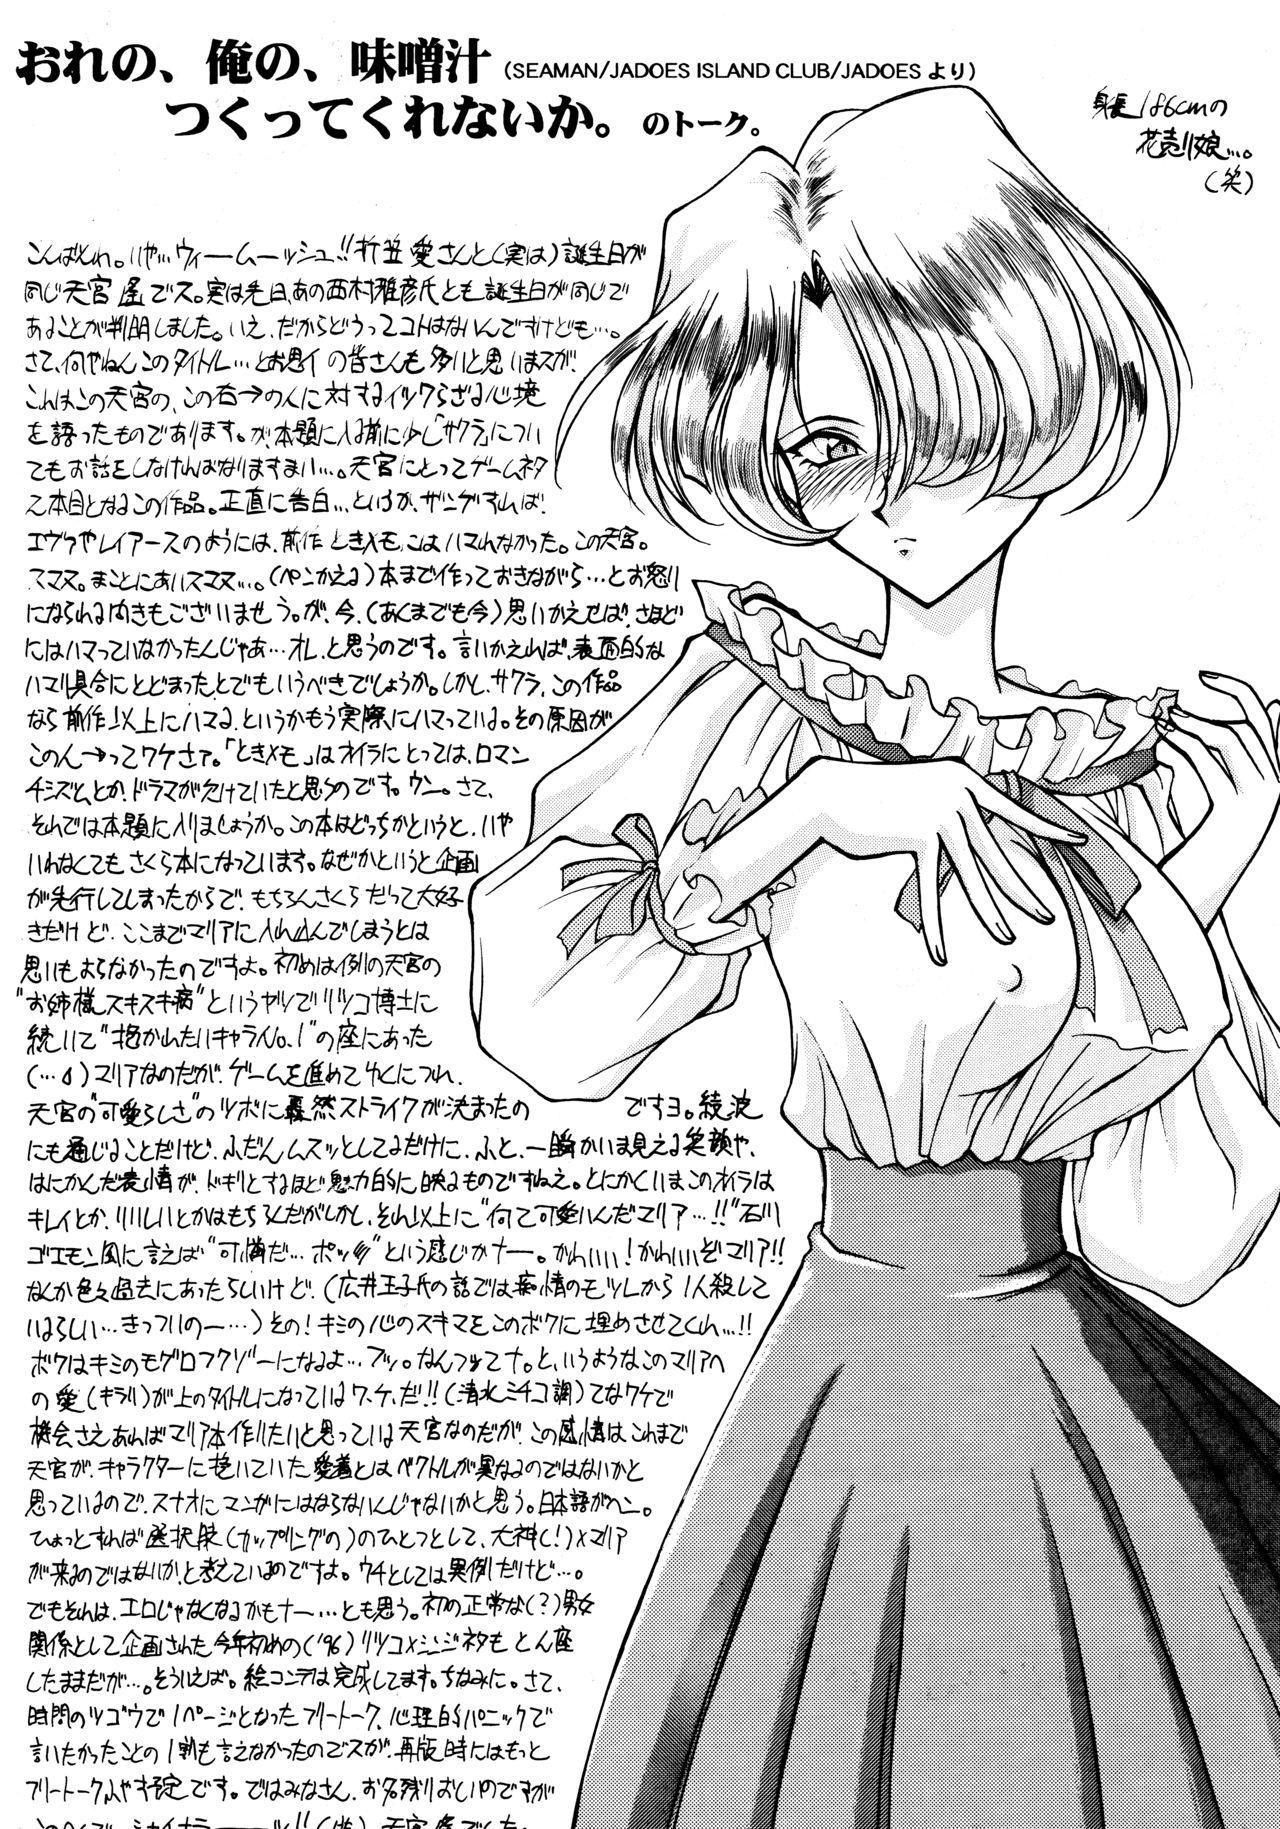 Gay Longhair Physical Love #2 - Sakura taisen Slave - Page 3